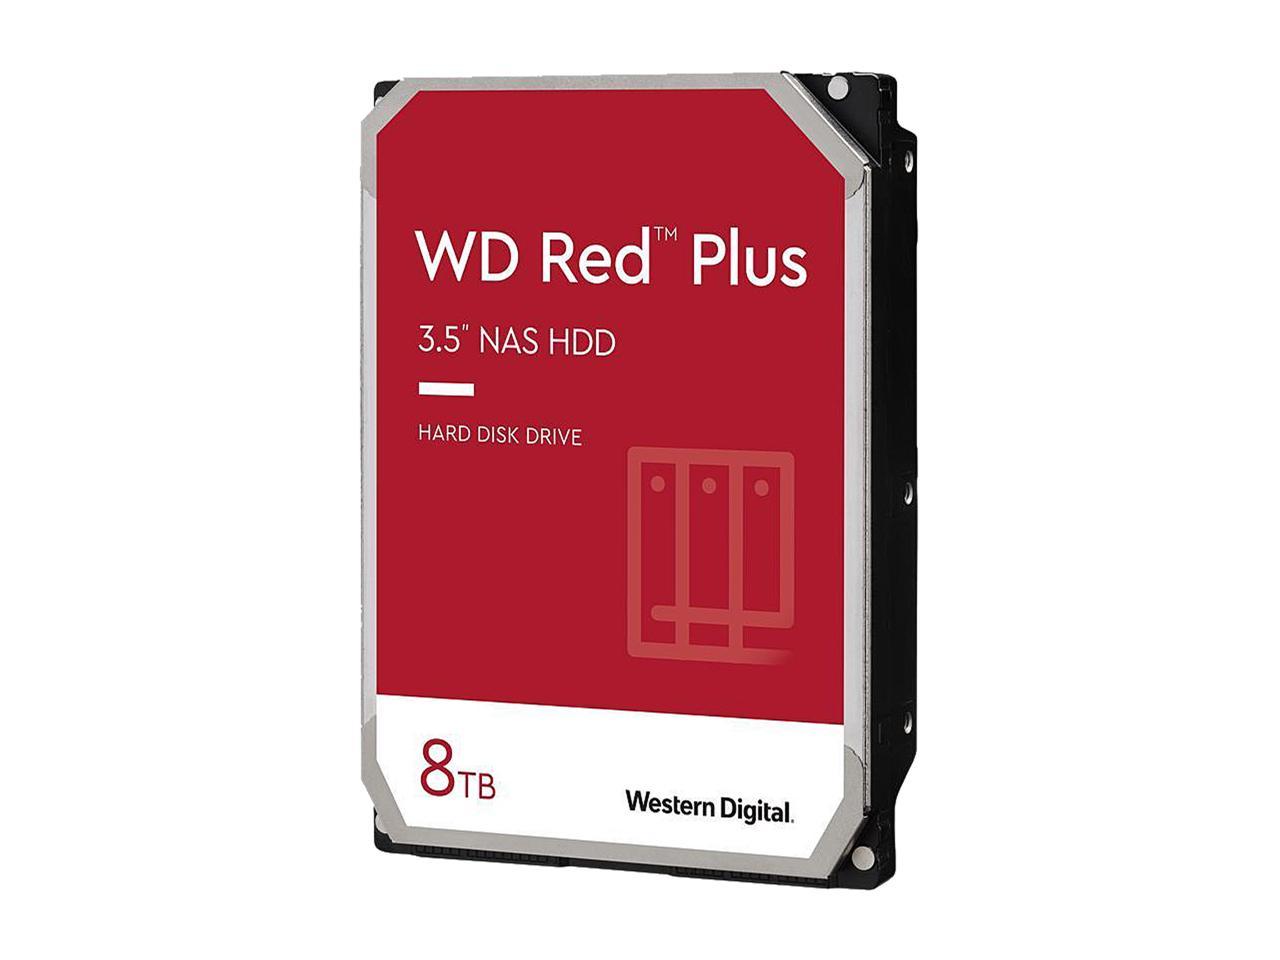 WD Red Plus 8TB CMR NAS Hard Drive HDD - 5640 RPM, 6 Gb/s, 128MB Cache, 3.5" - WD80EFZZ - Newegg.com